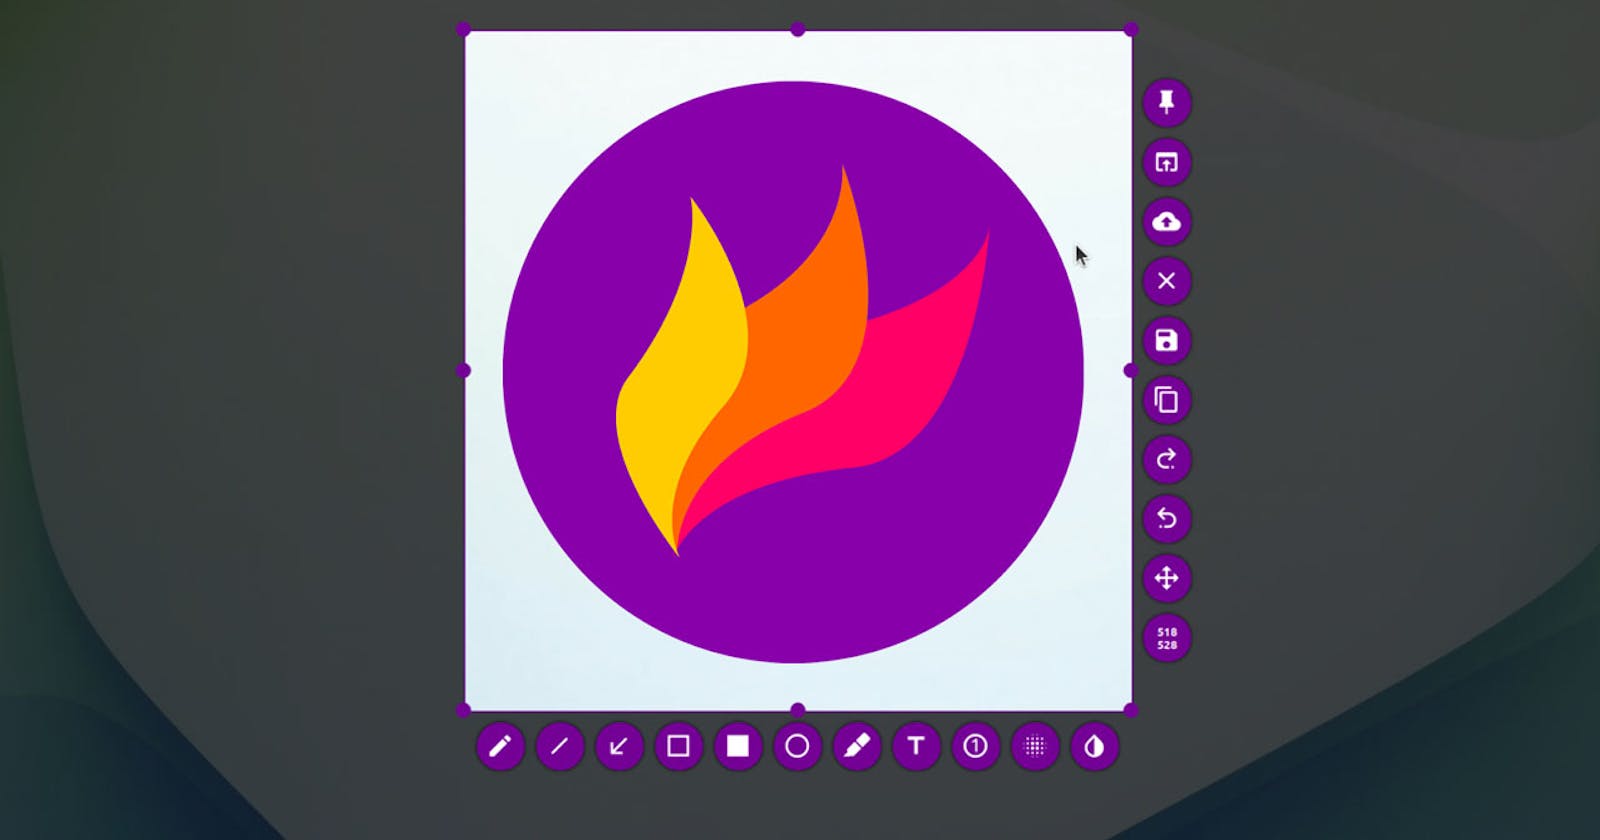 Installing the best screenshot tool on Fedora 38: Flameshot